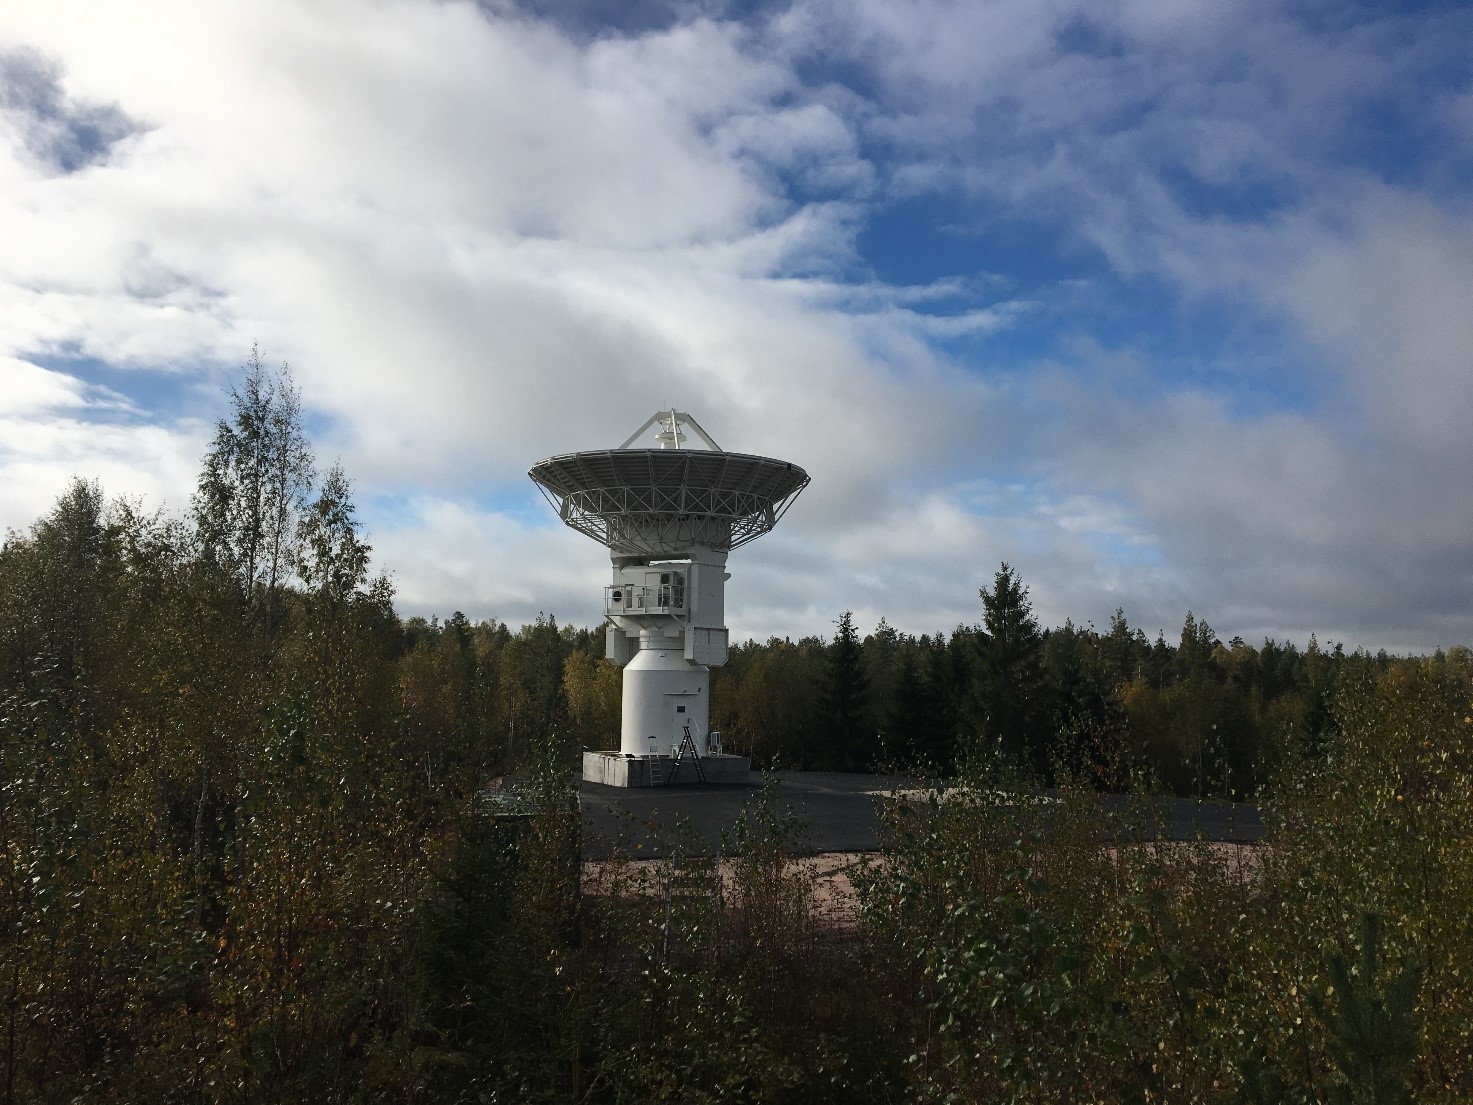 Radiotelescope at Metsähovi.